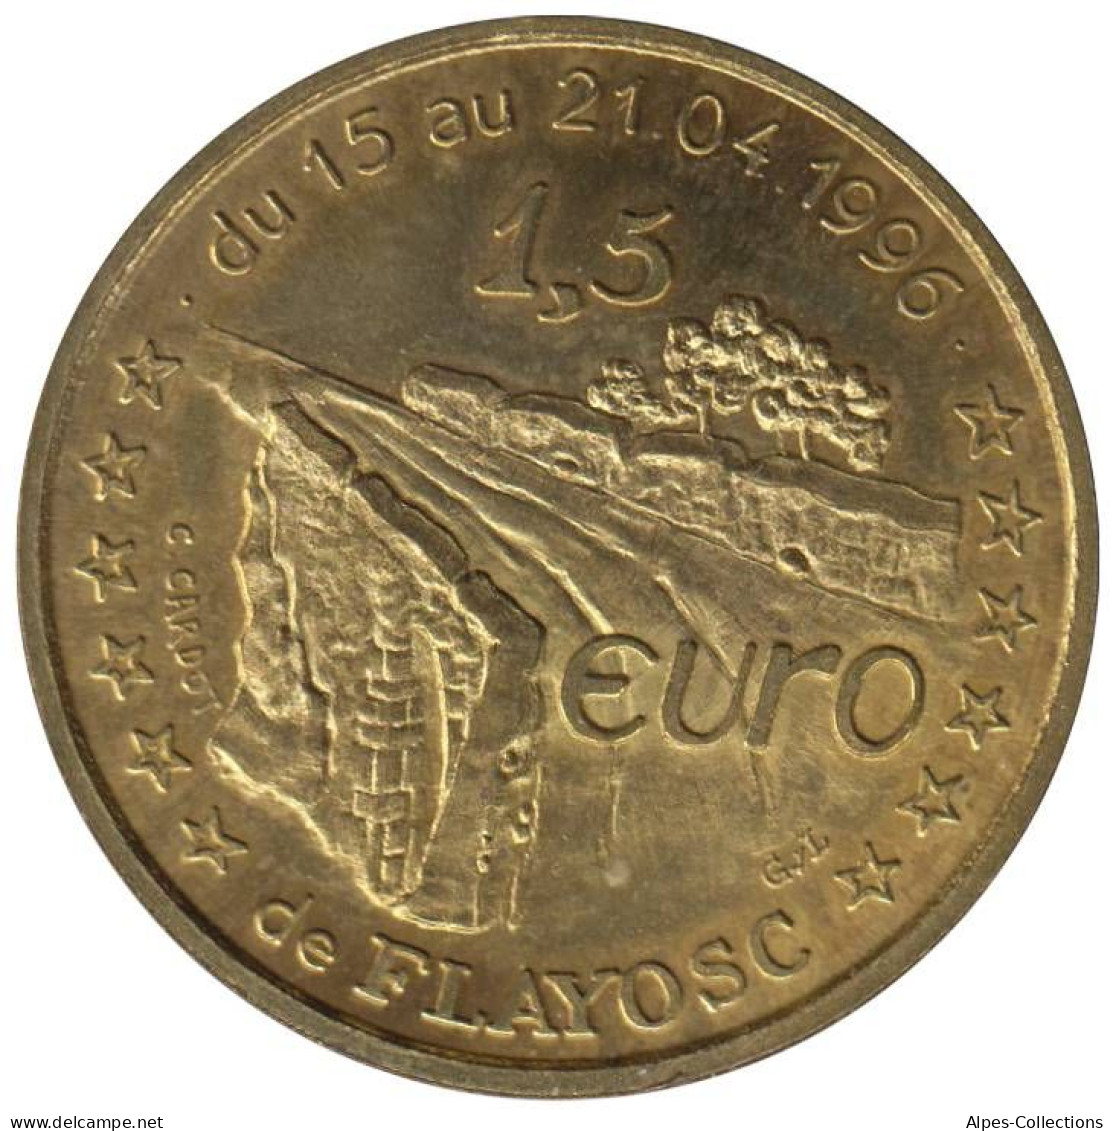 FLAYOSC - EU0015.1 - 1,5 EURO DES VILLES - Réf: NR - 1996 - Euro Der Städte